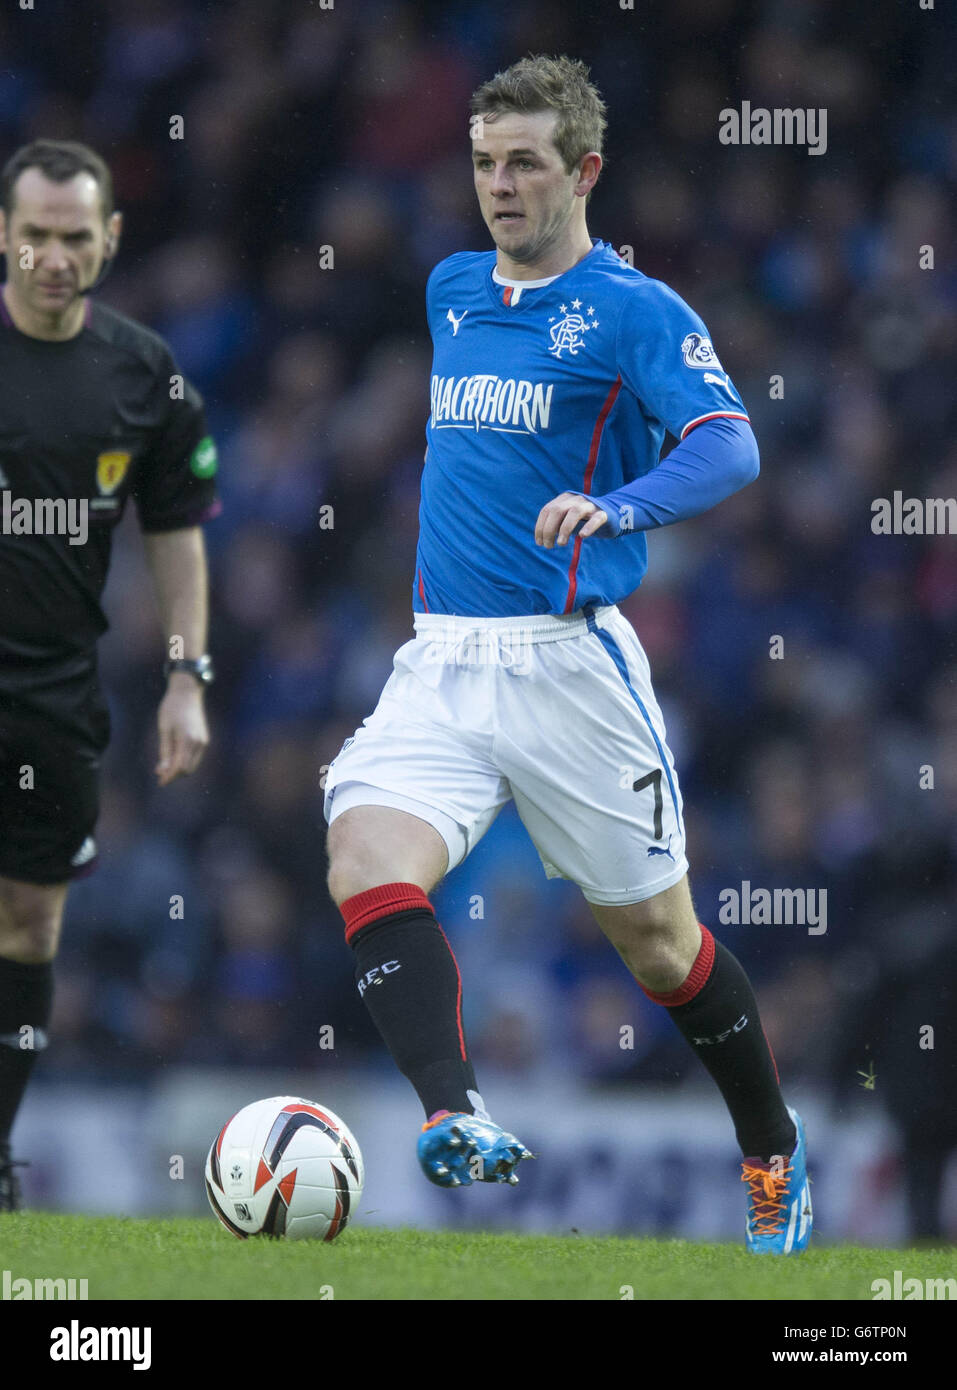 Rangers David Templeton during the Scottish League One match at Ibrox Stadium, Glasgow. Stock Photo